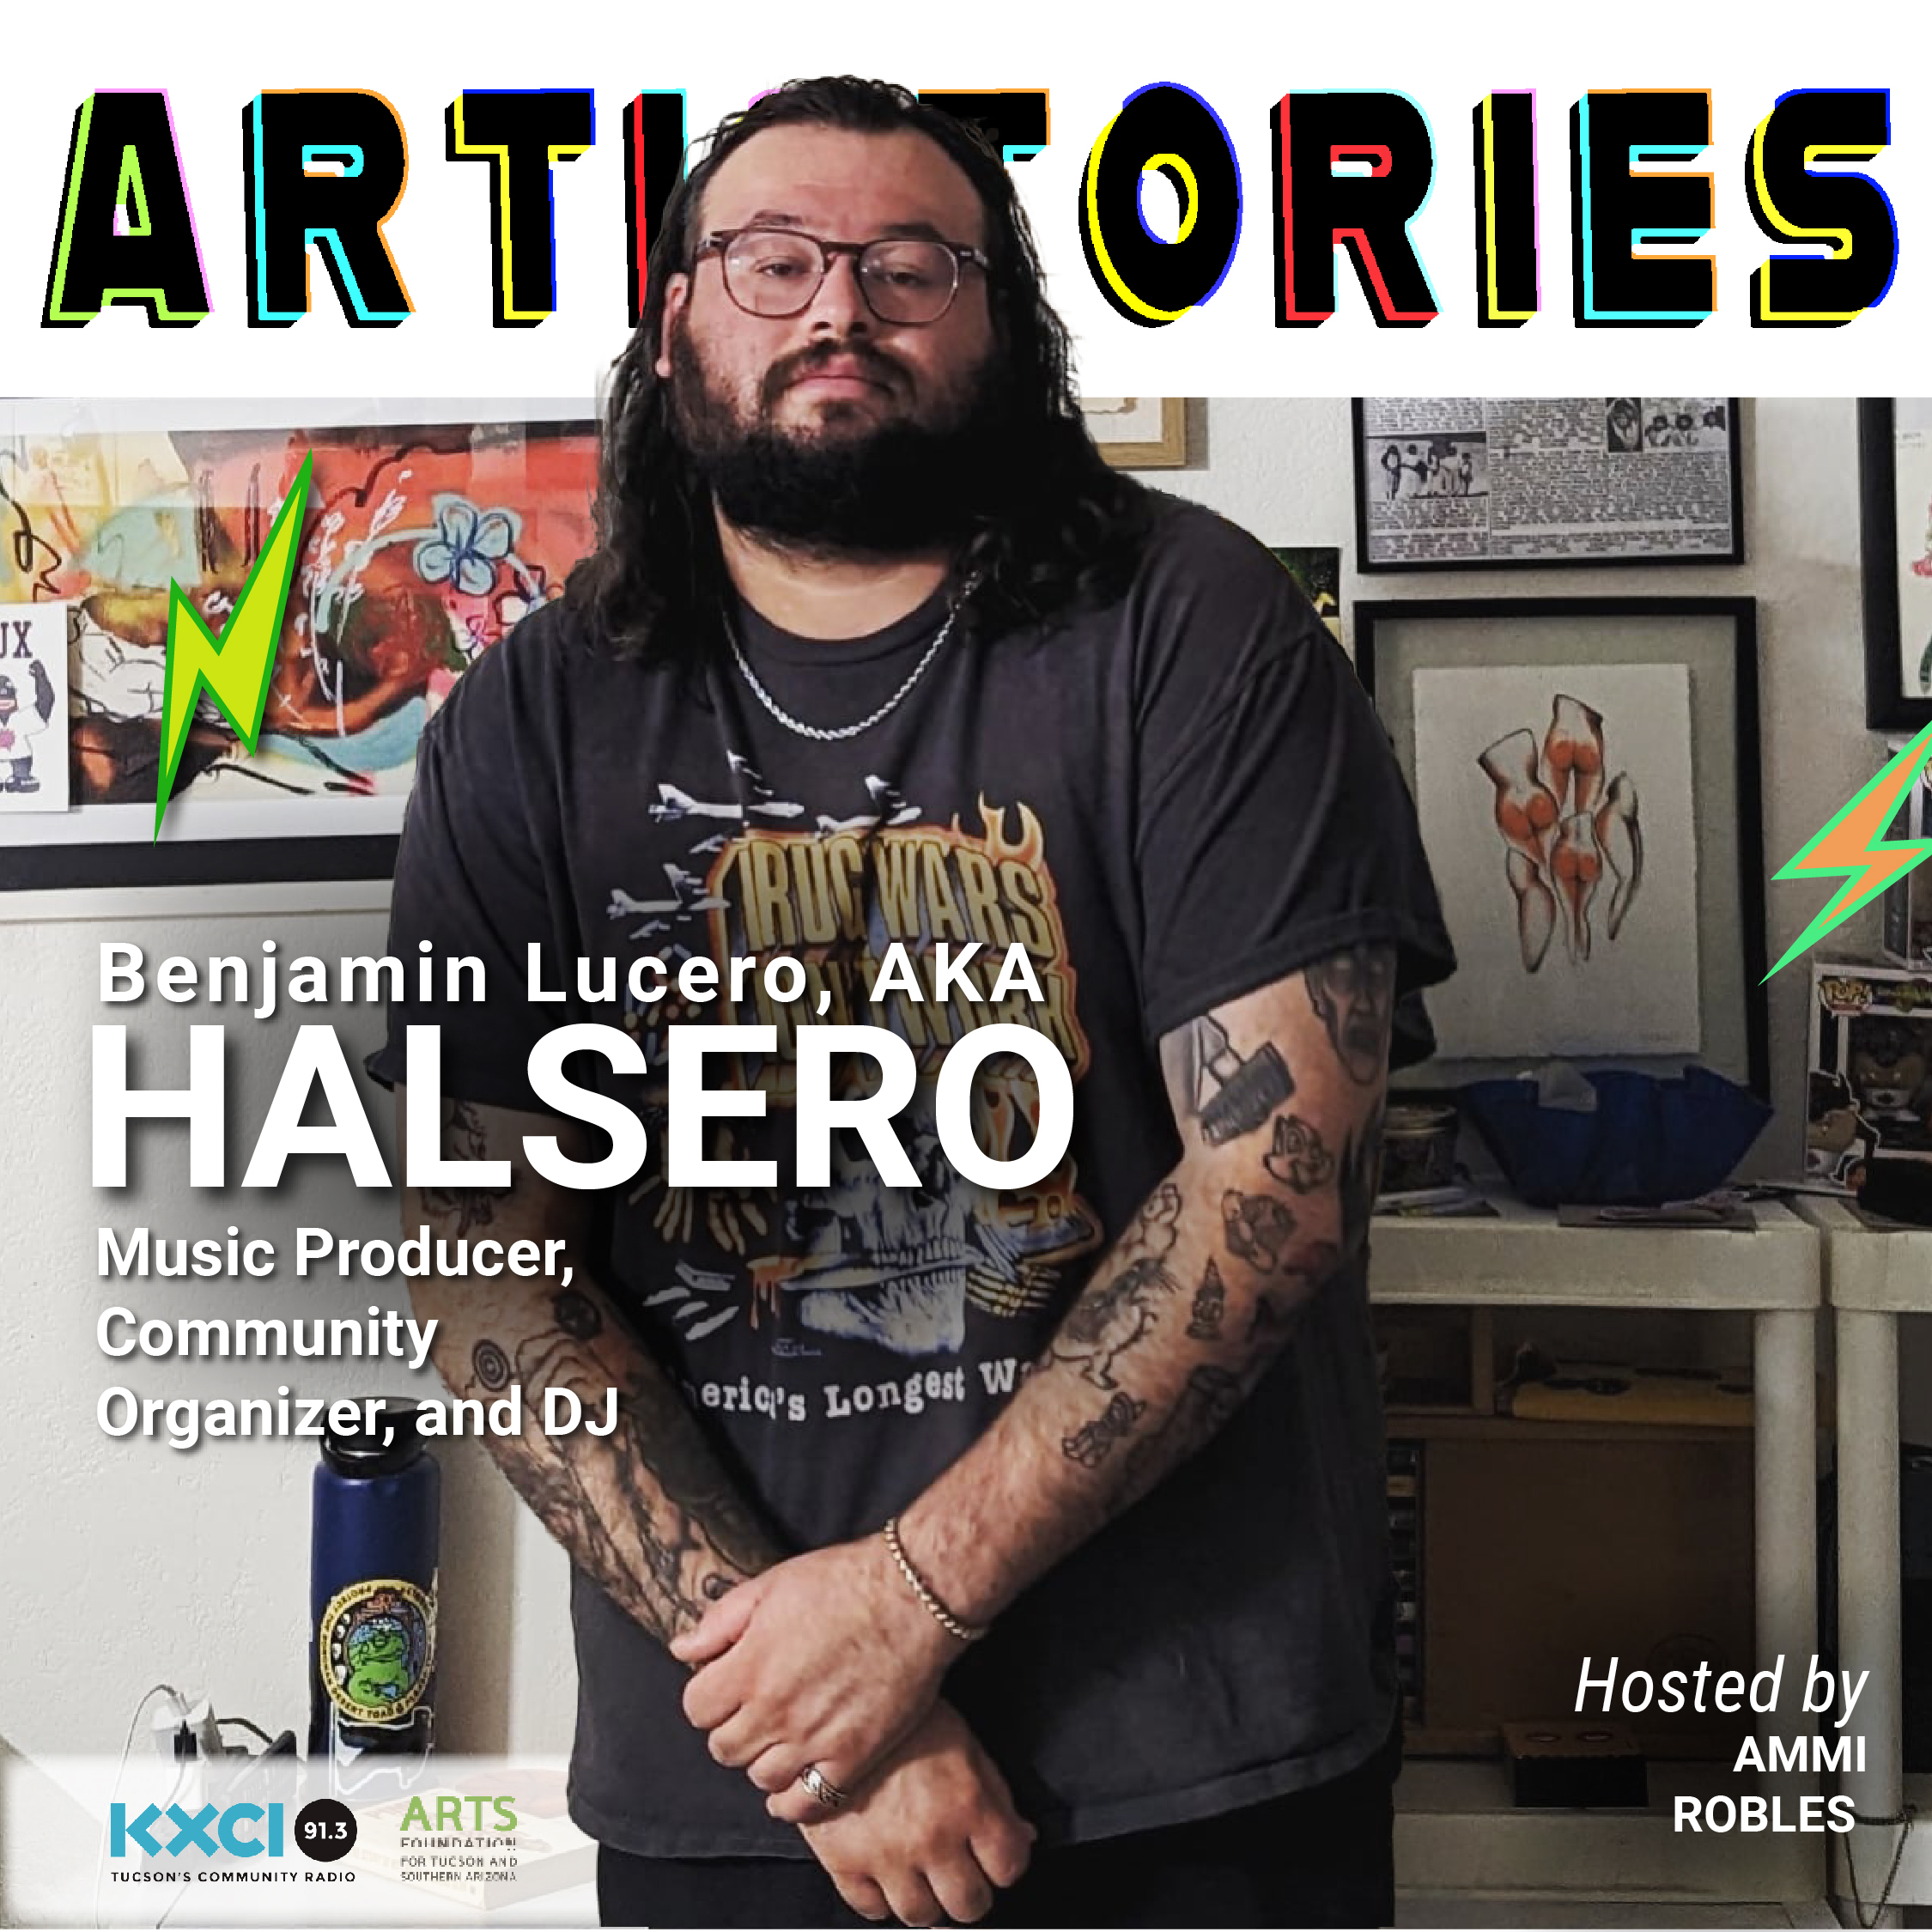 Benjamin Lucero, AKA Halsero - Music Producer, Community Organizer, and DJ